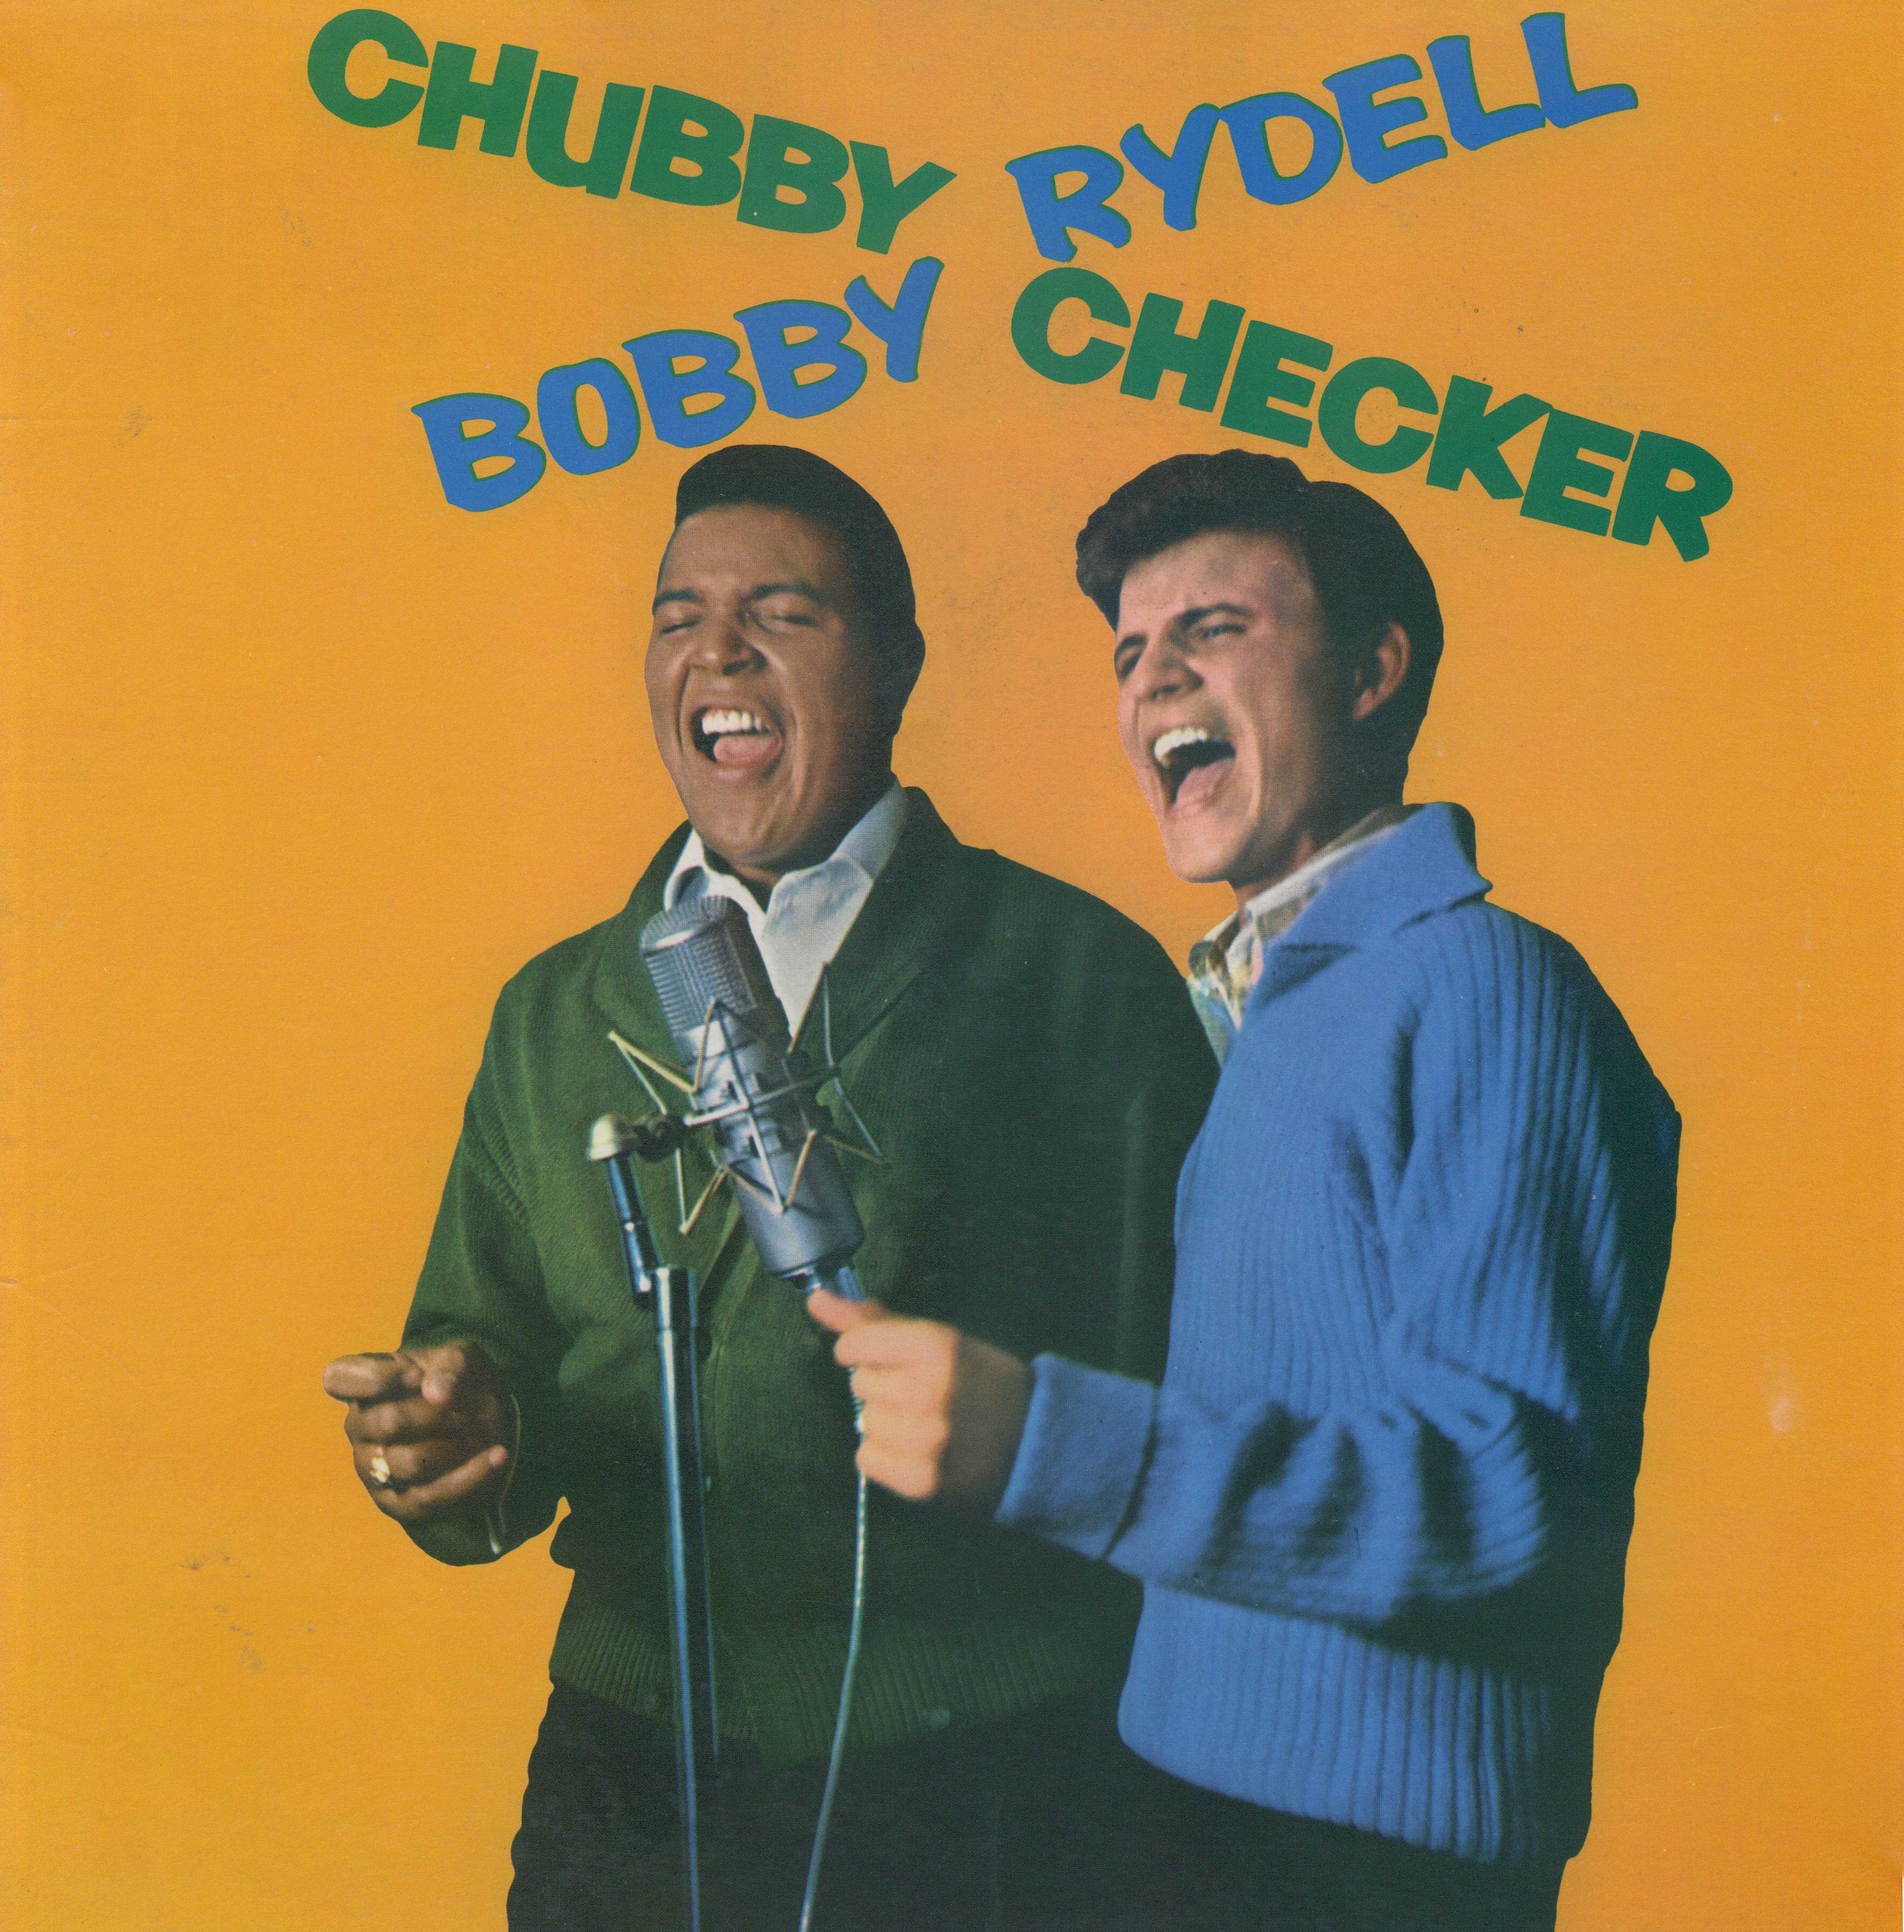 best of Checker to Lyrics chubby teach twist rydell and me bobby